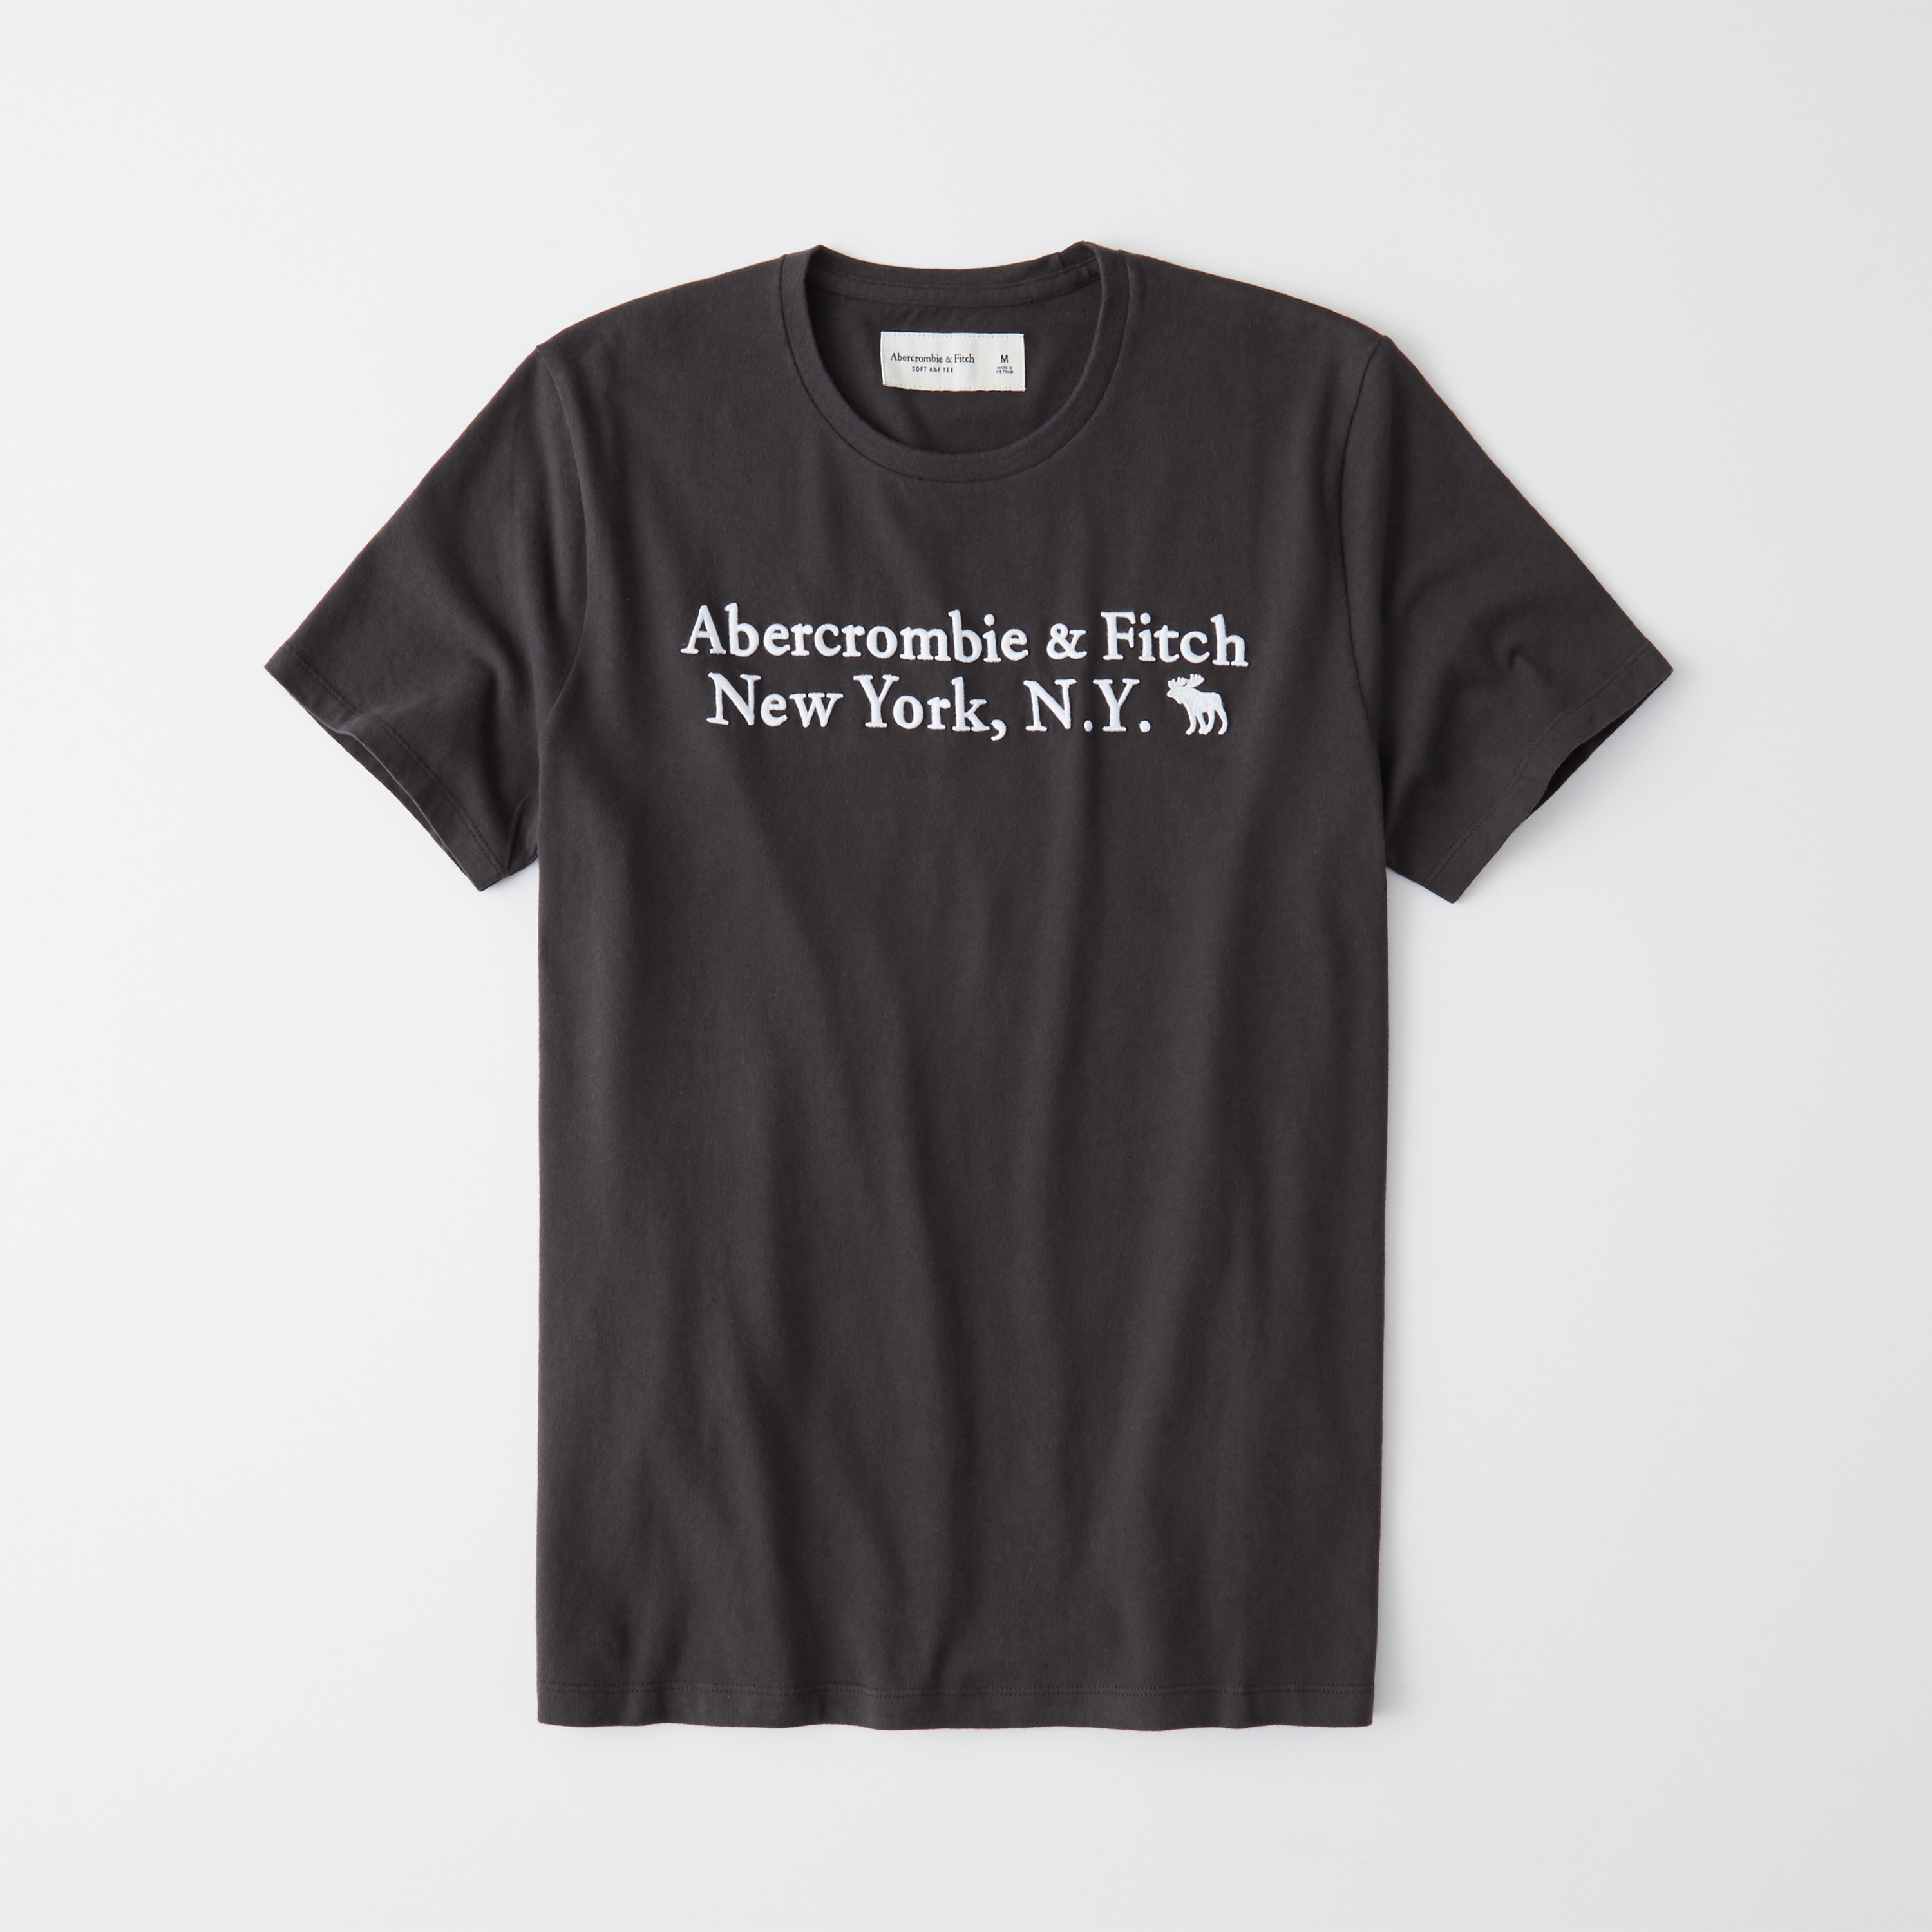 a&f t shirt sale